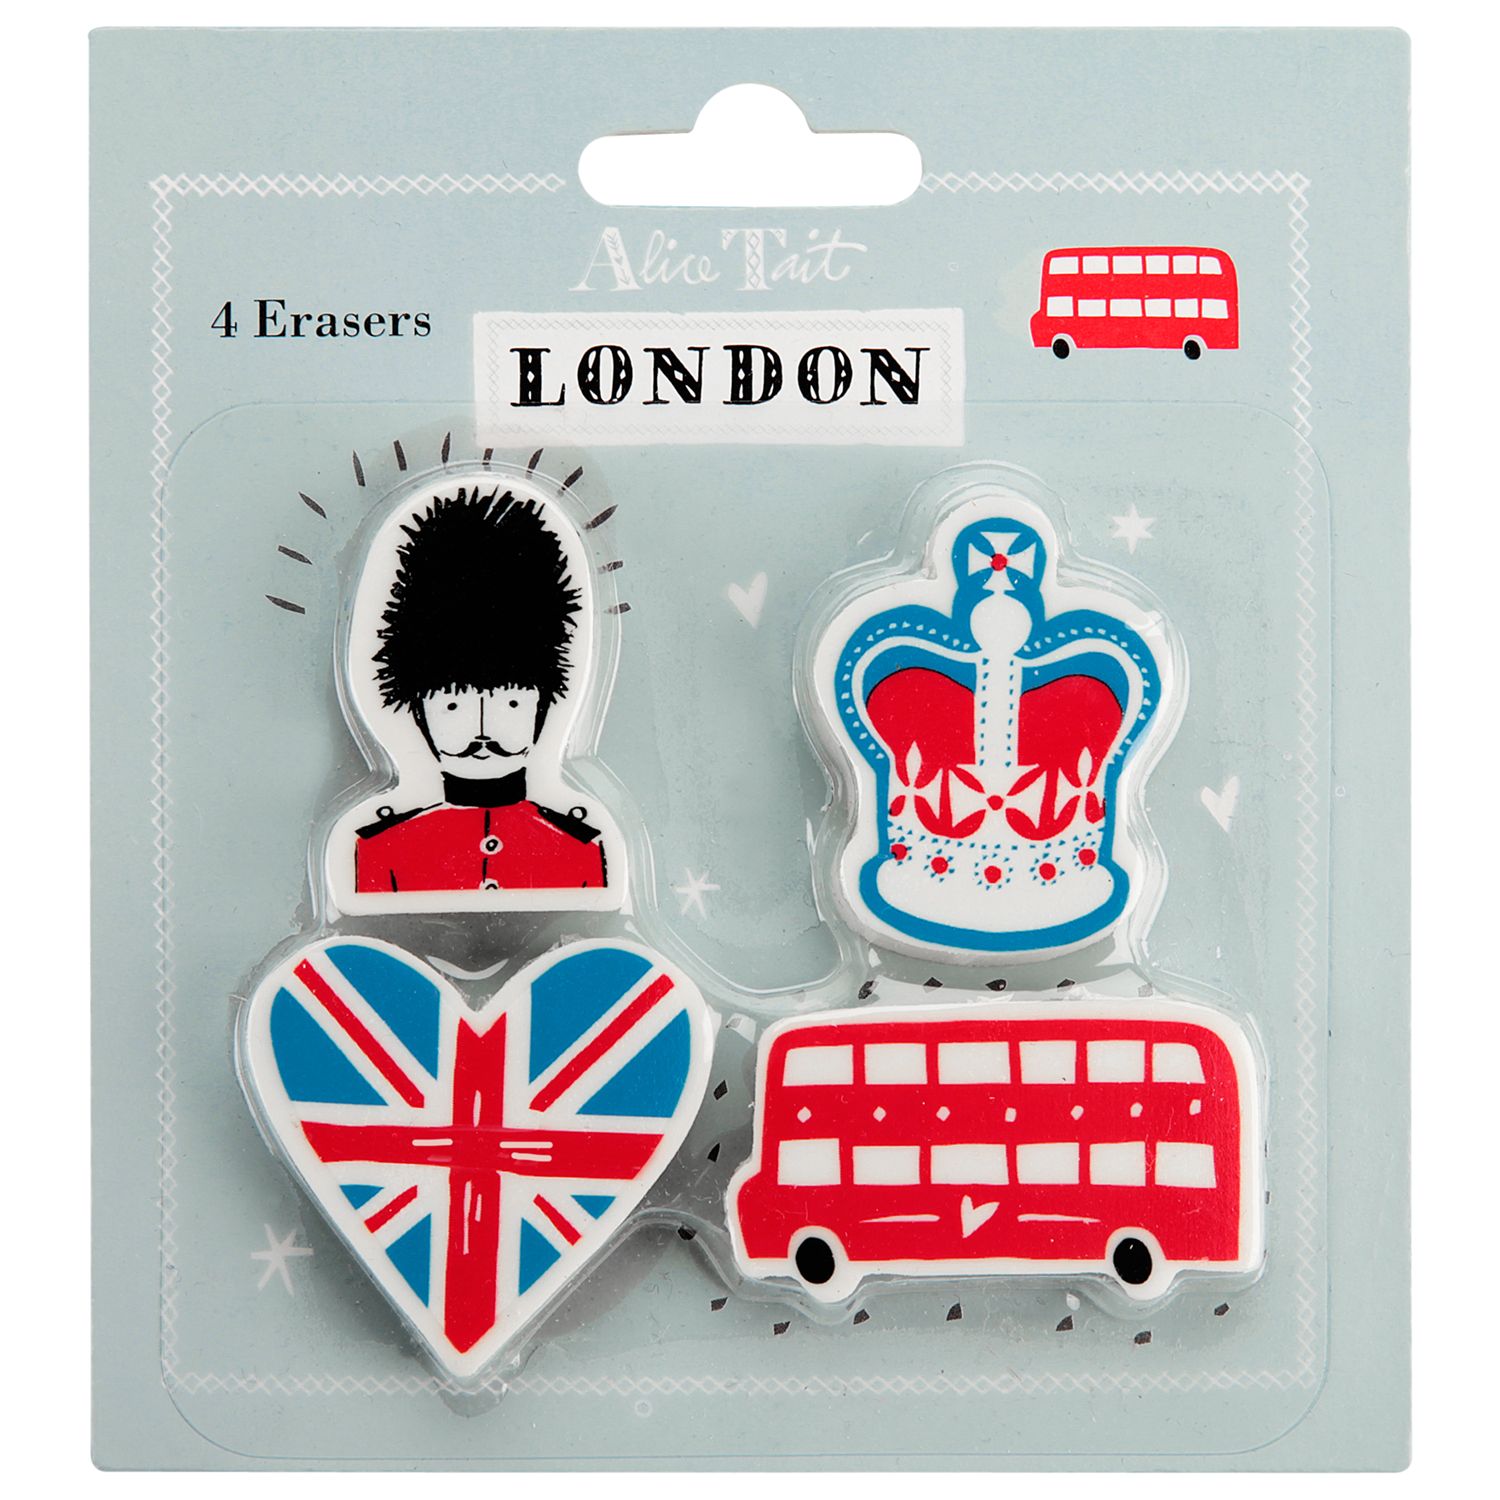 Alice Tait London Eraser Set (£5.50)